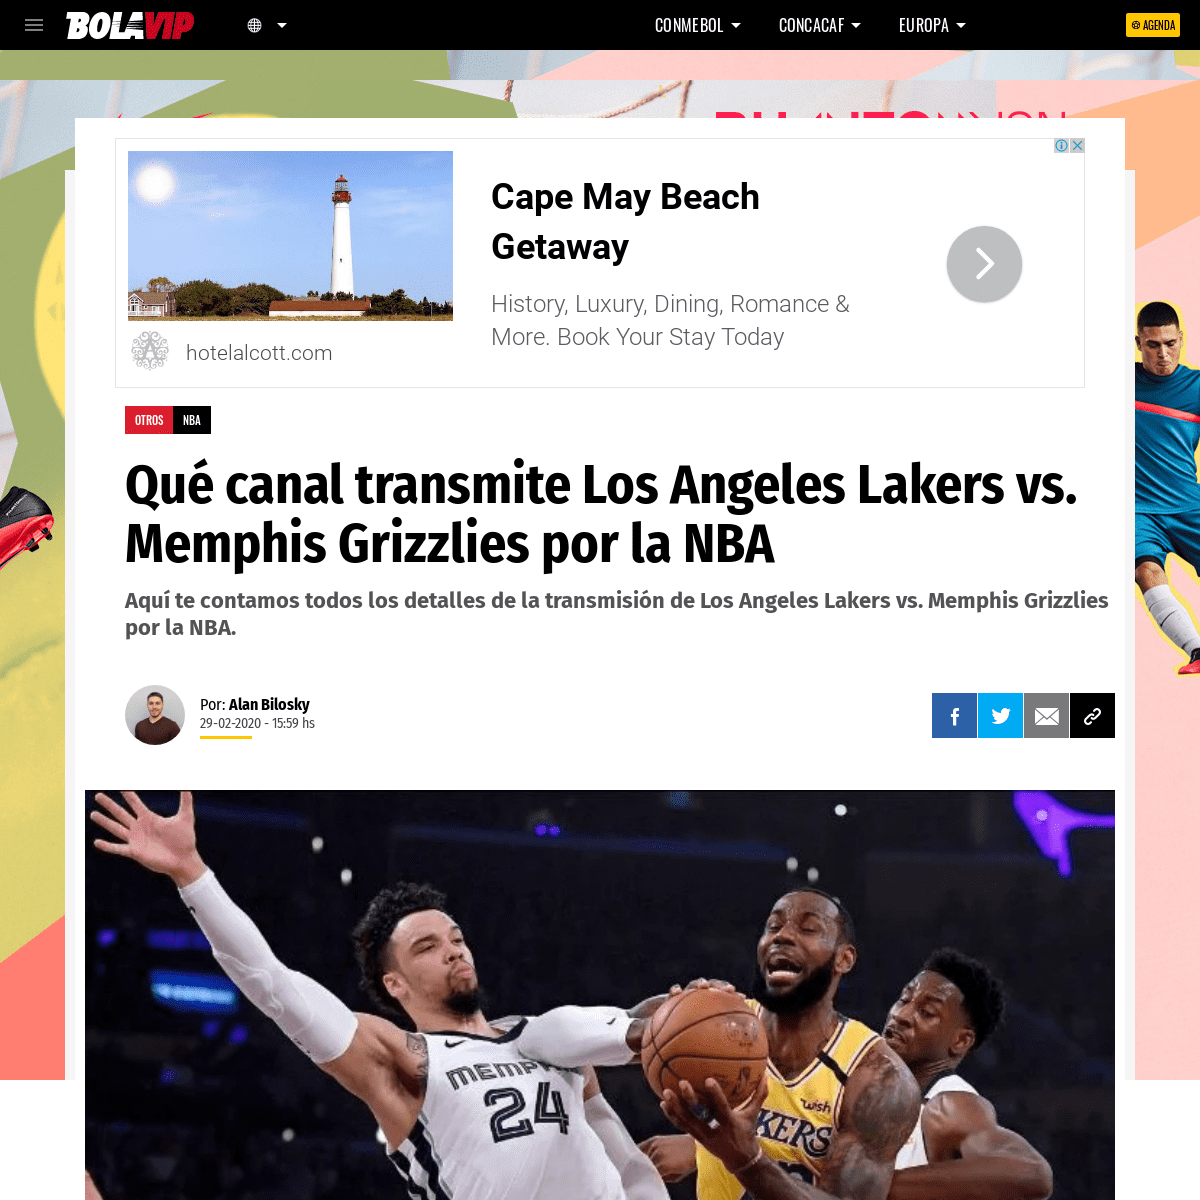 A complete backup of bolavip.com/otros/Que-canal-transmite-Los-Angeles-Lakers-vs.-Memphis-Grizzlies-por-la-NBA-F22-20200229-0079